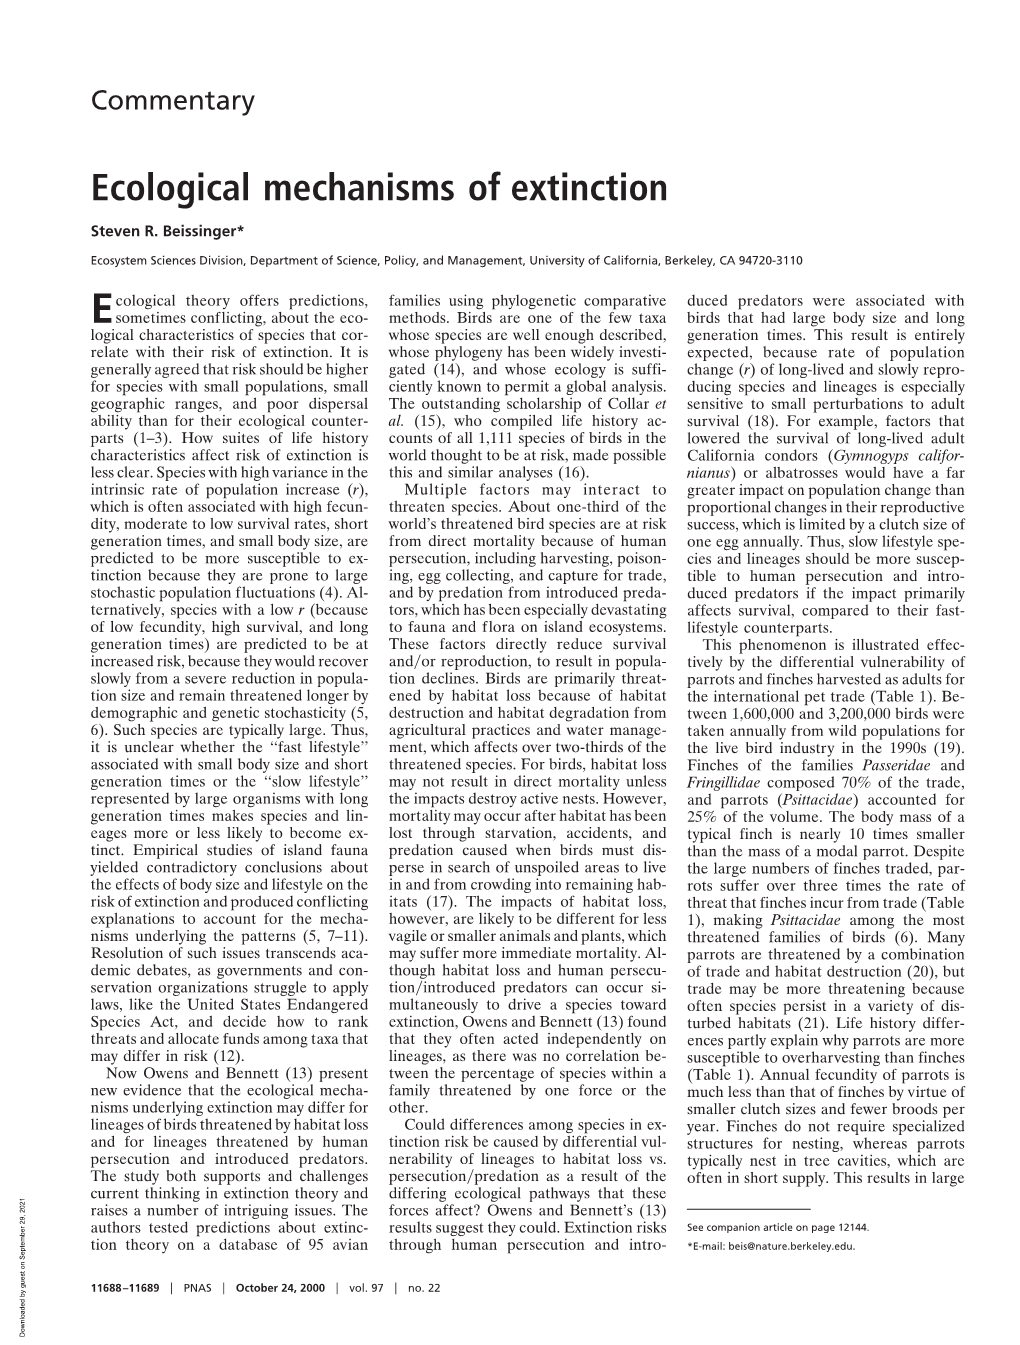 Ecological Mechanisms of Extinction